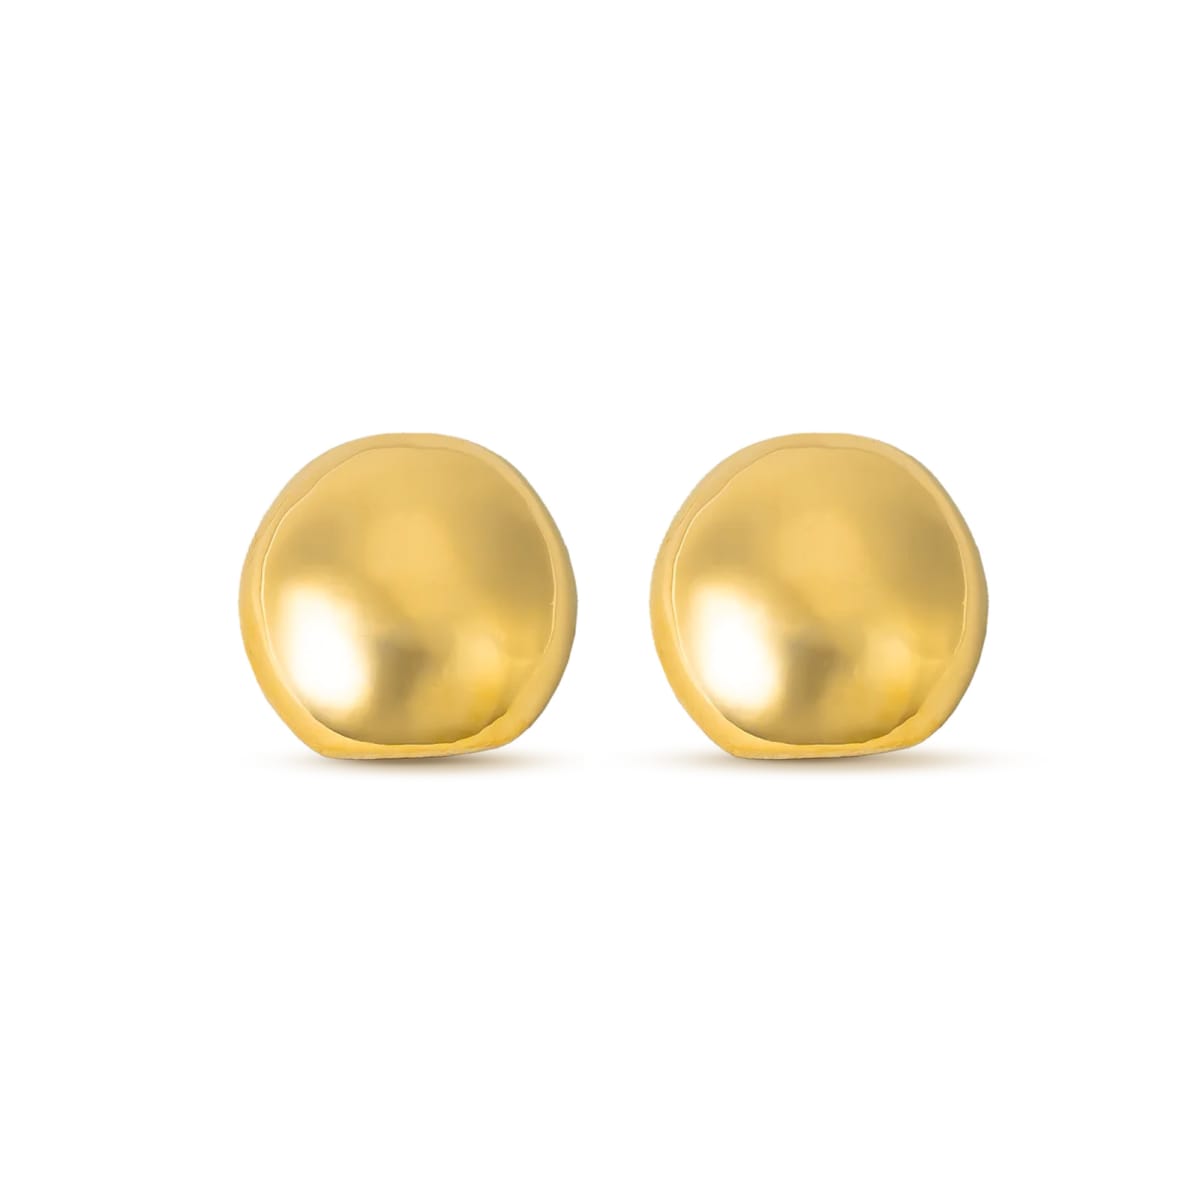 10k Solid Yellow Gold Large Plain Round Hoop Earrings 30mm X1.5mm 1.3GR  Women-ladies Jewelry Earrings Solid 10k Gold Hoop Earrings - Etsy